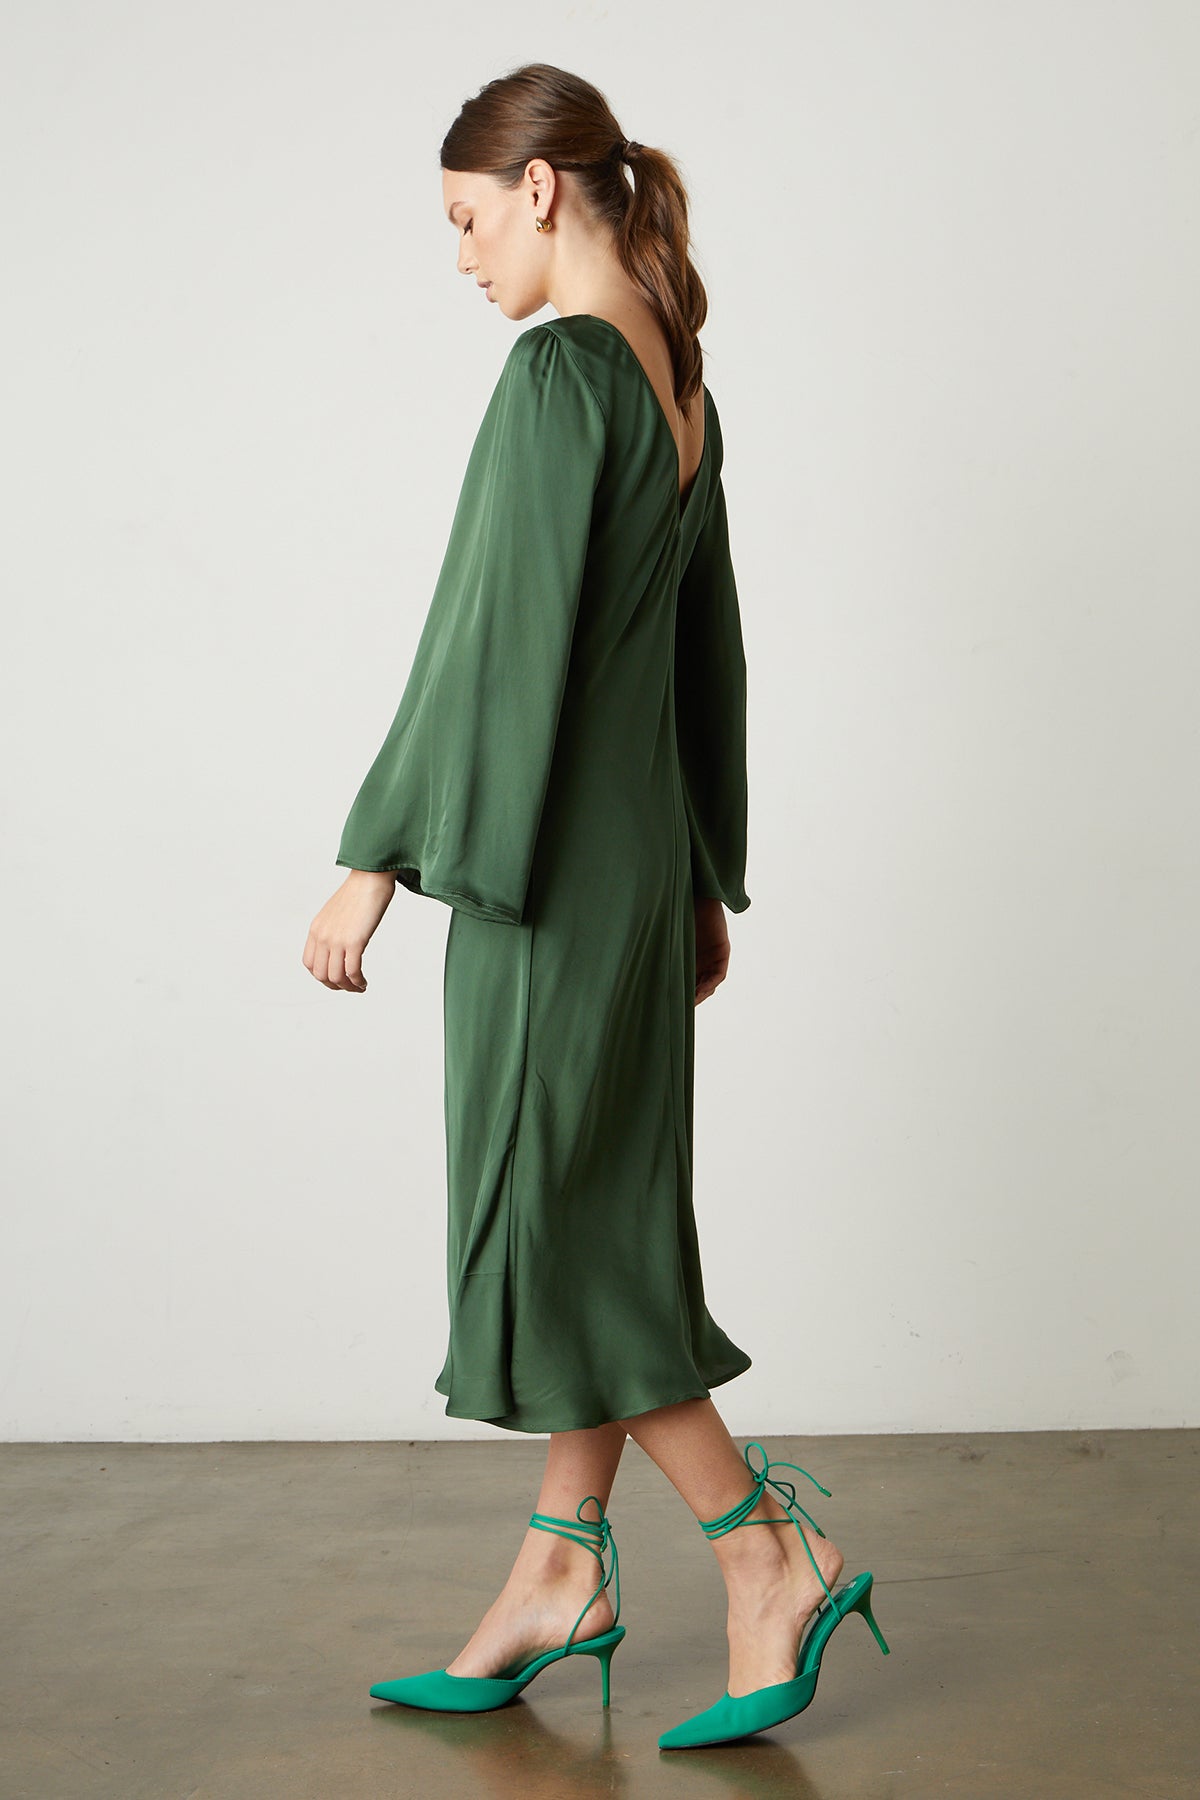 Catherine Satin Midi Dress in fern green full length side-25668993843393